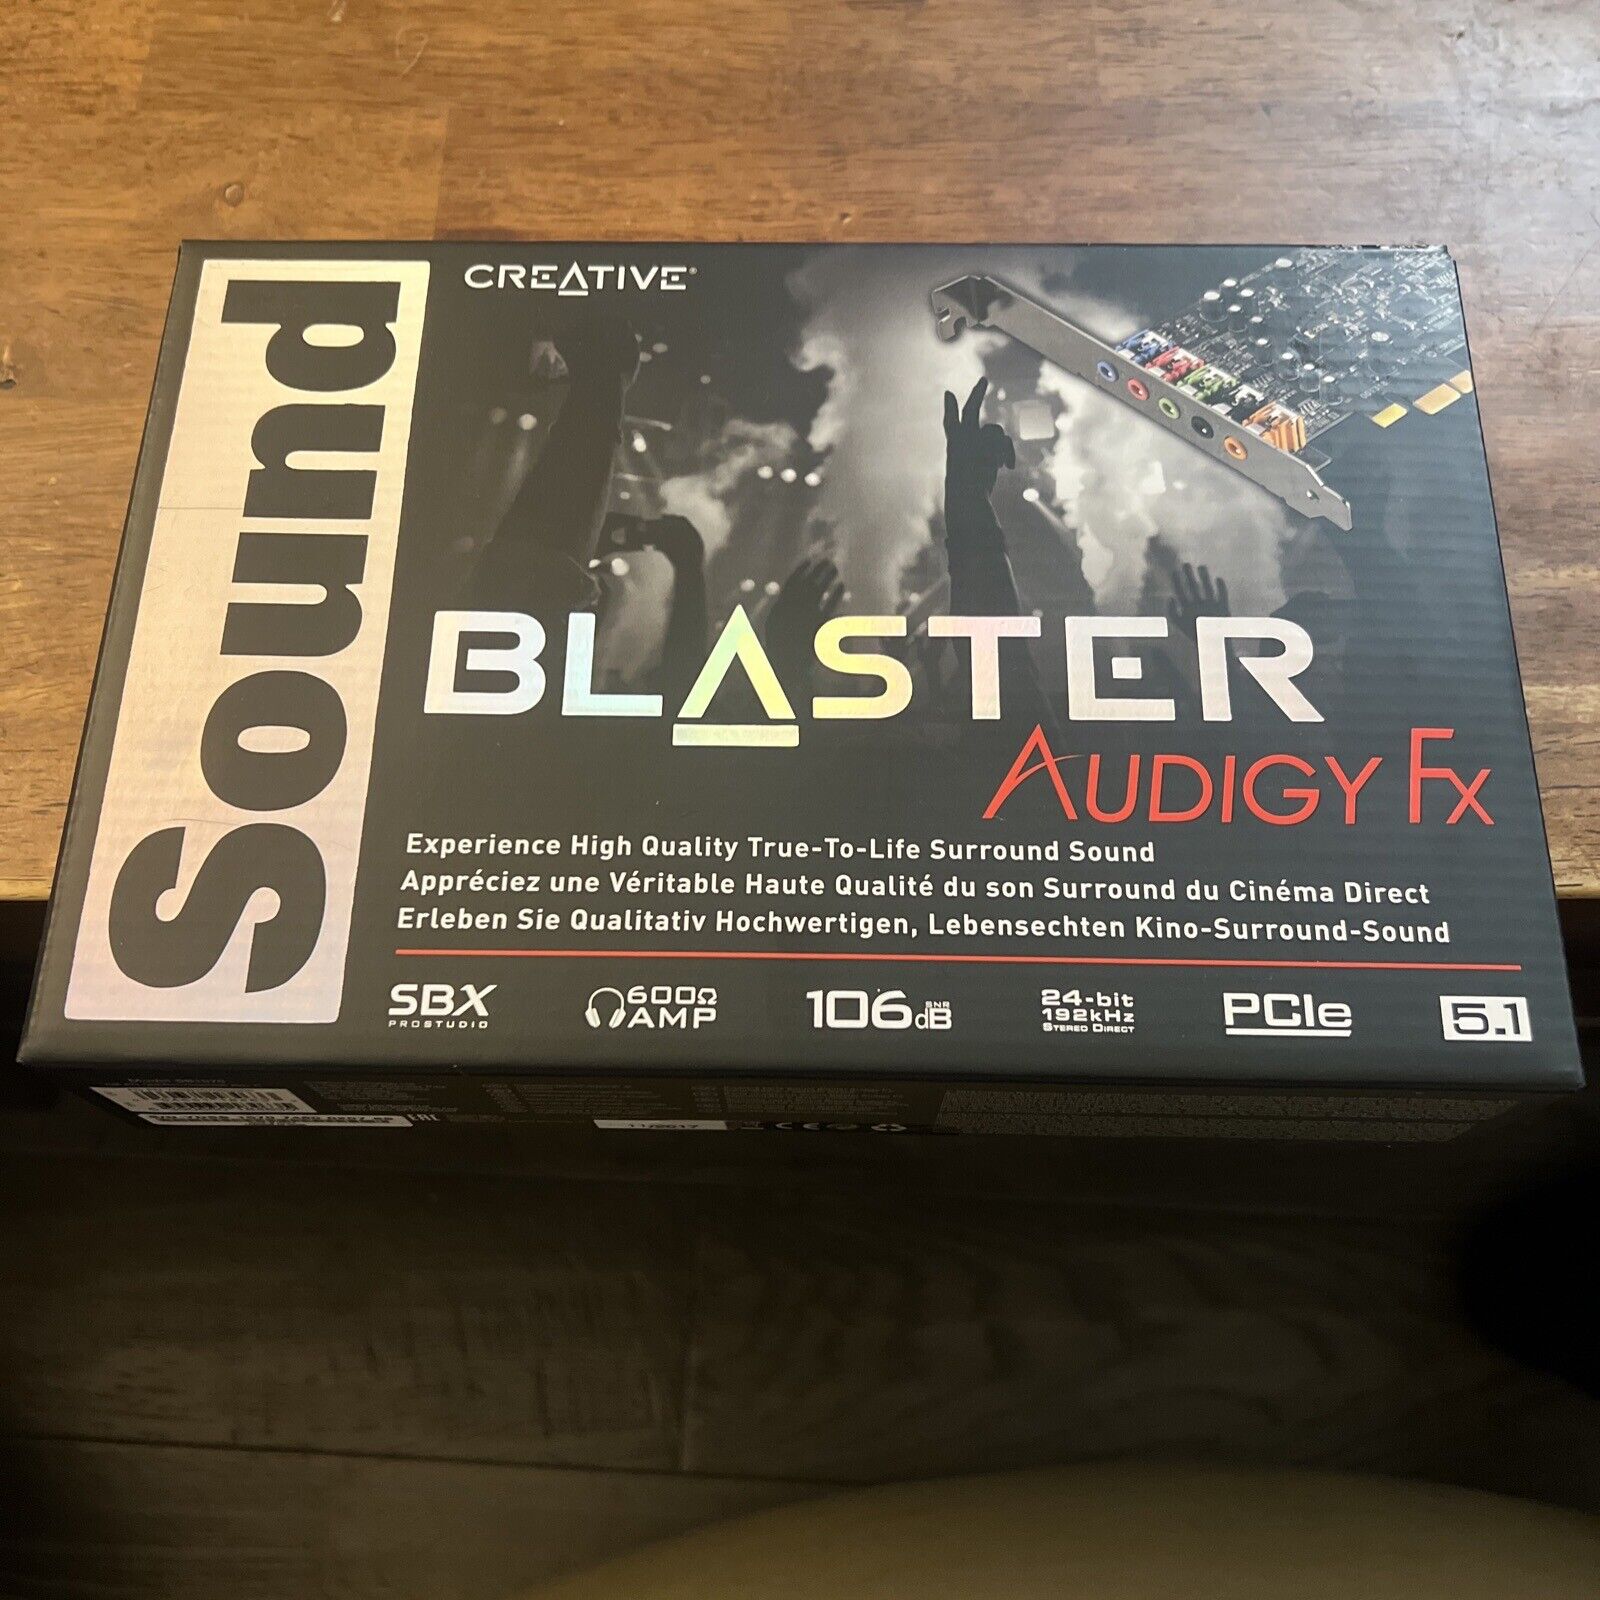 Creative Sound Blaster Audigy FX 5.1 PCIe Audio Card SBX 600Amp 106dB 24-Bit